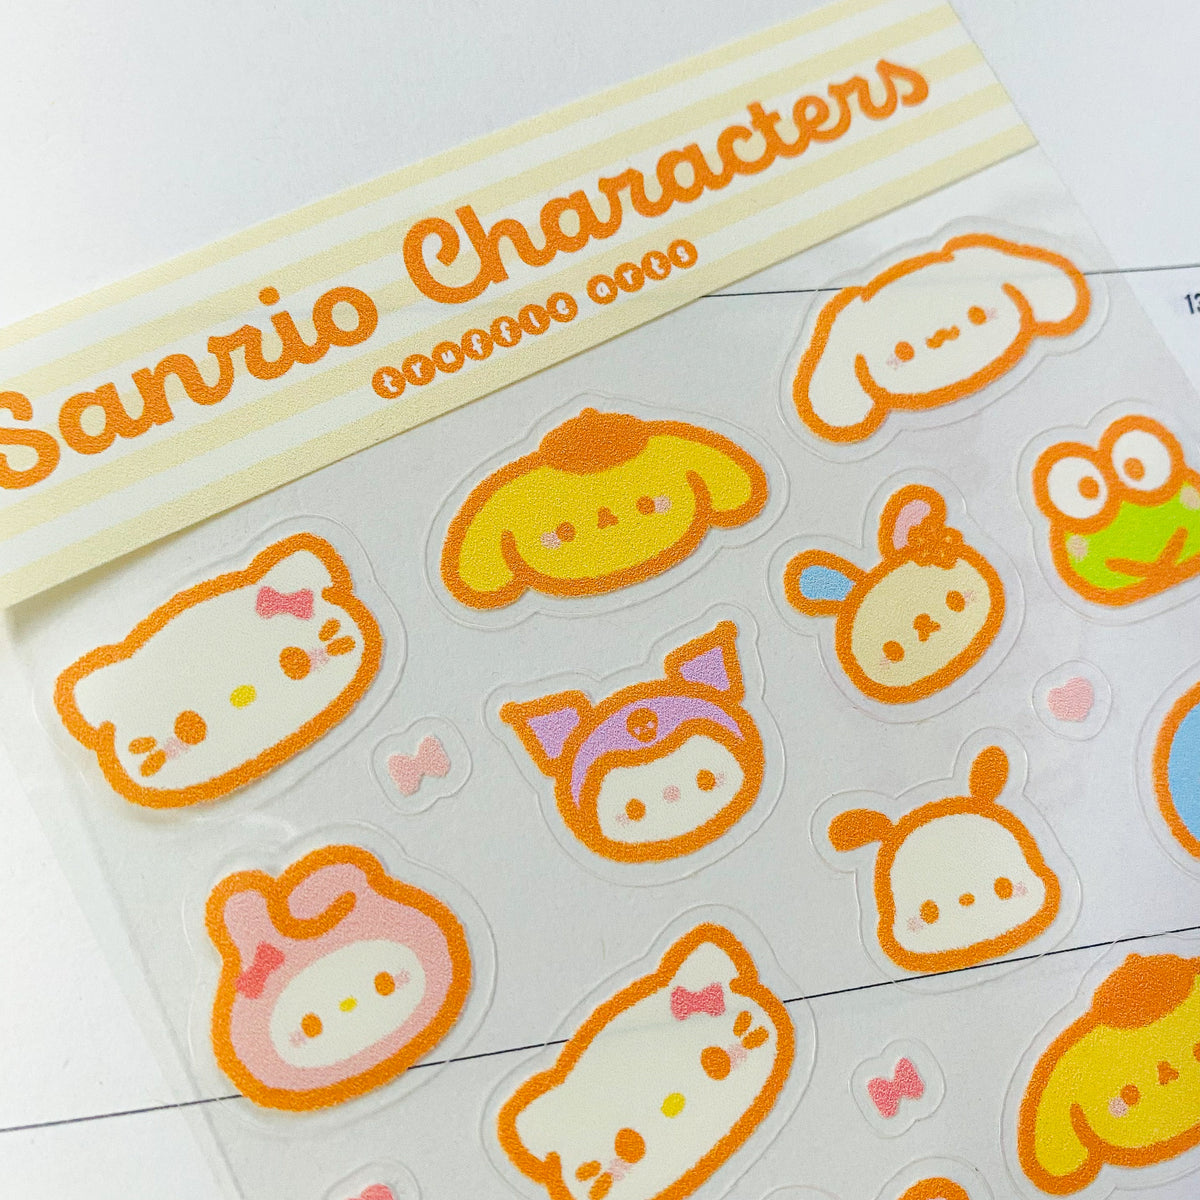 Japan Sanrio Mini Sticker Sheet - Sanrio Characters